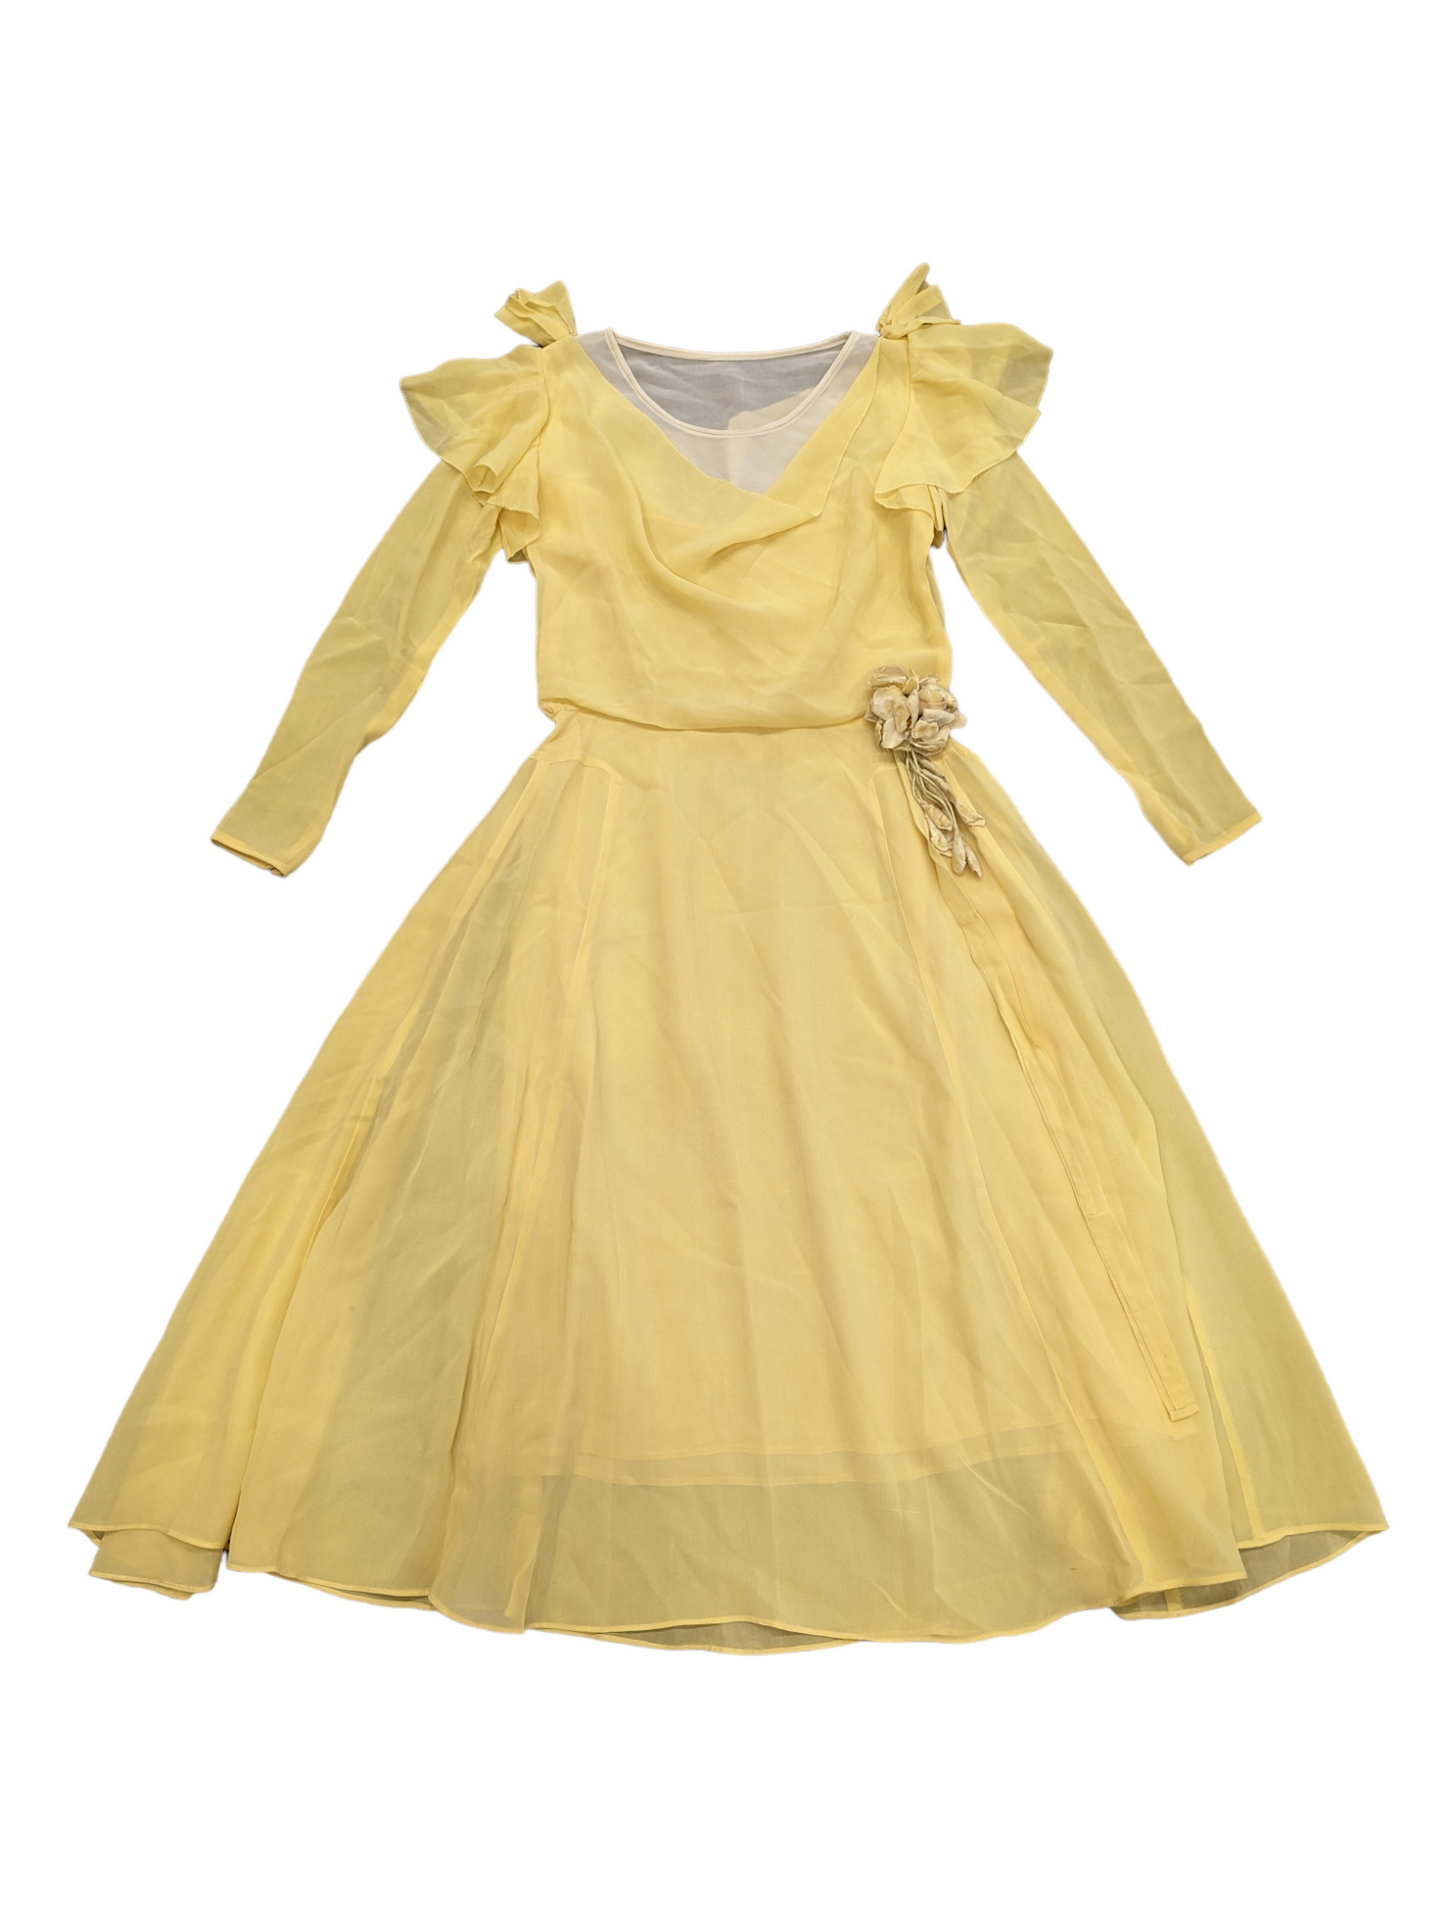 Stunning 1930's Yellow Wedding Dress